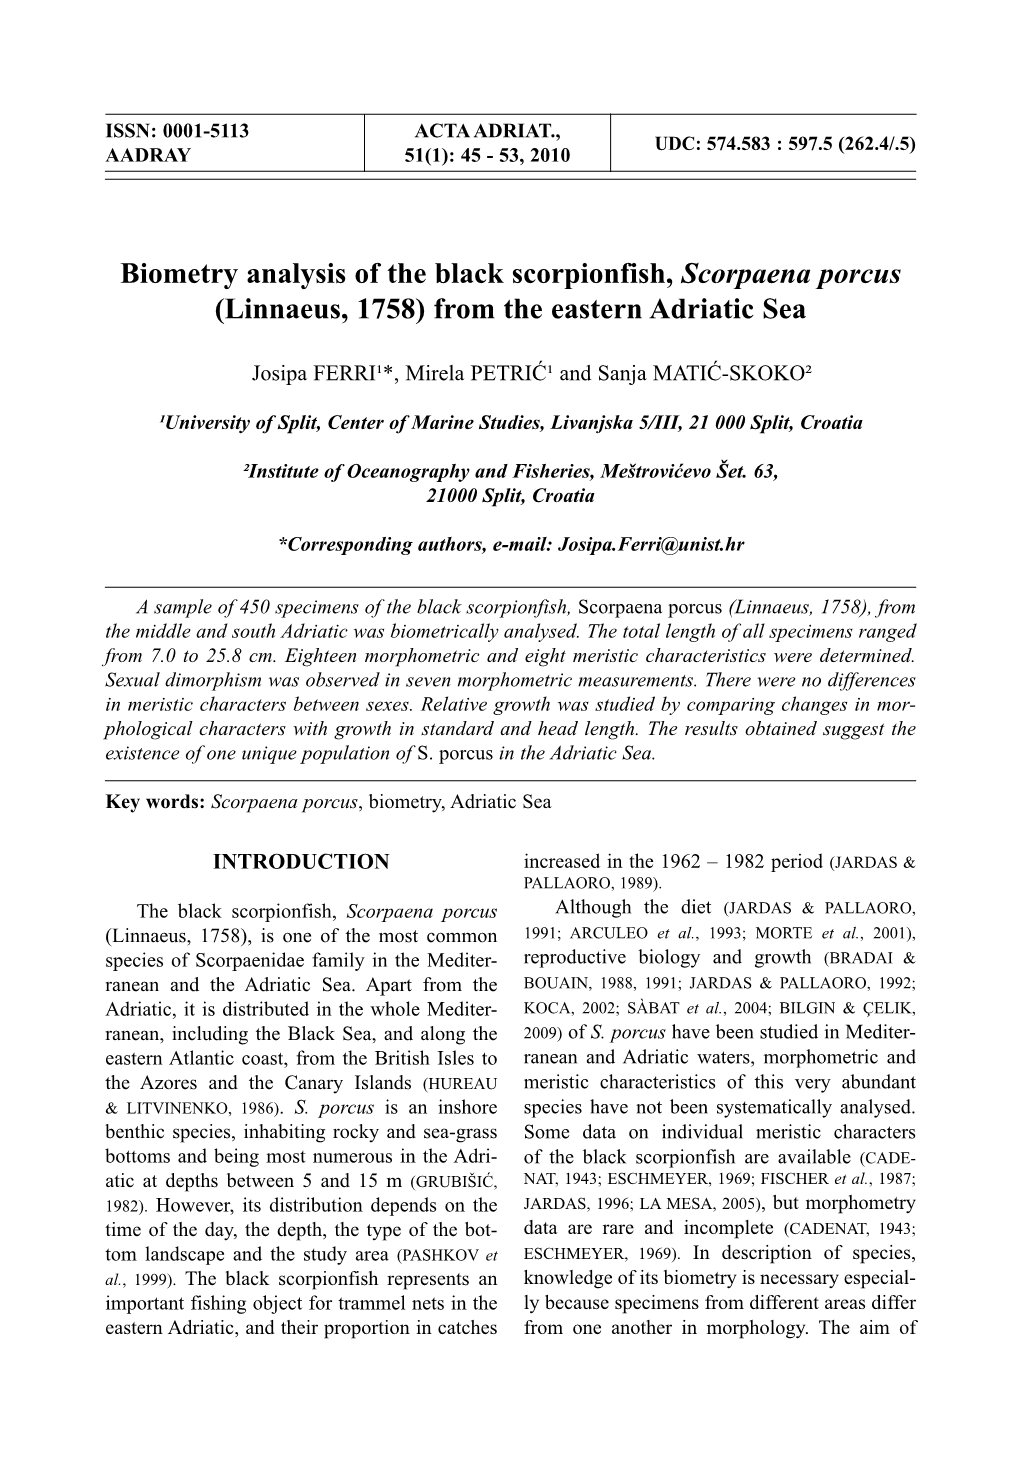 Biometry Analysis of the Black Scorpionfish, Scorpaena Porcus (Linnaeus, 1758) from the Eastern Adriatic Sea